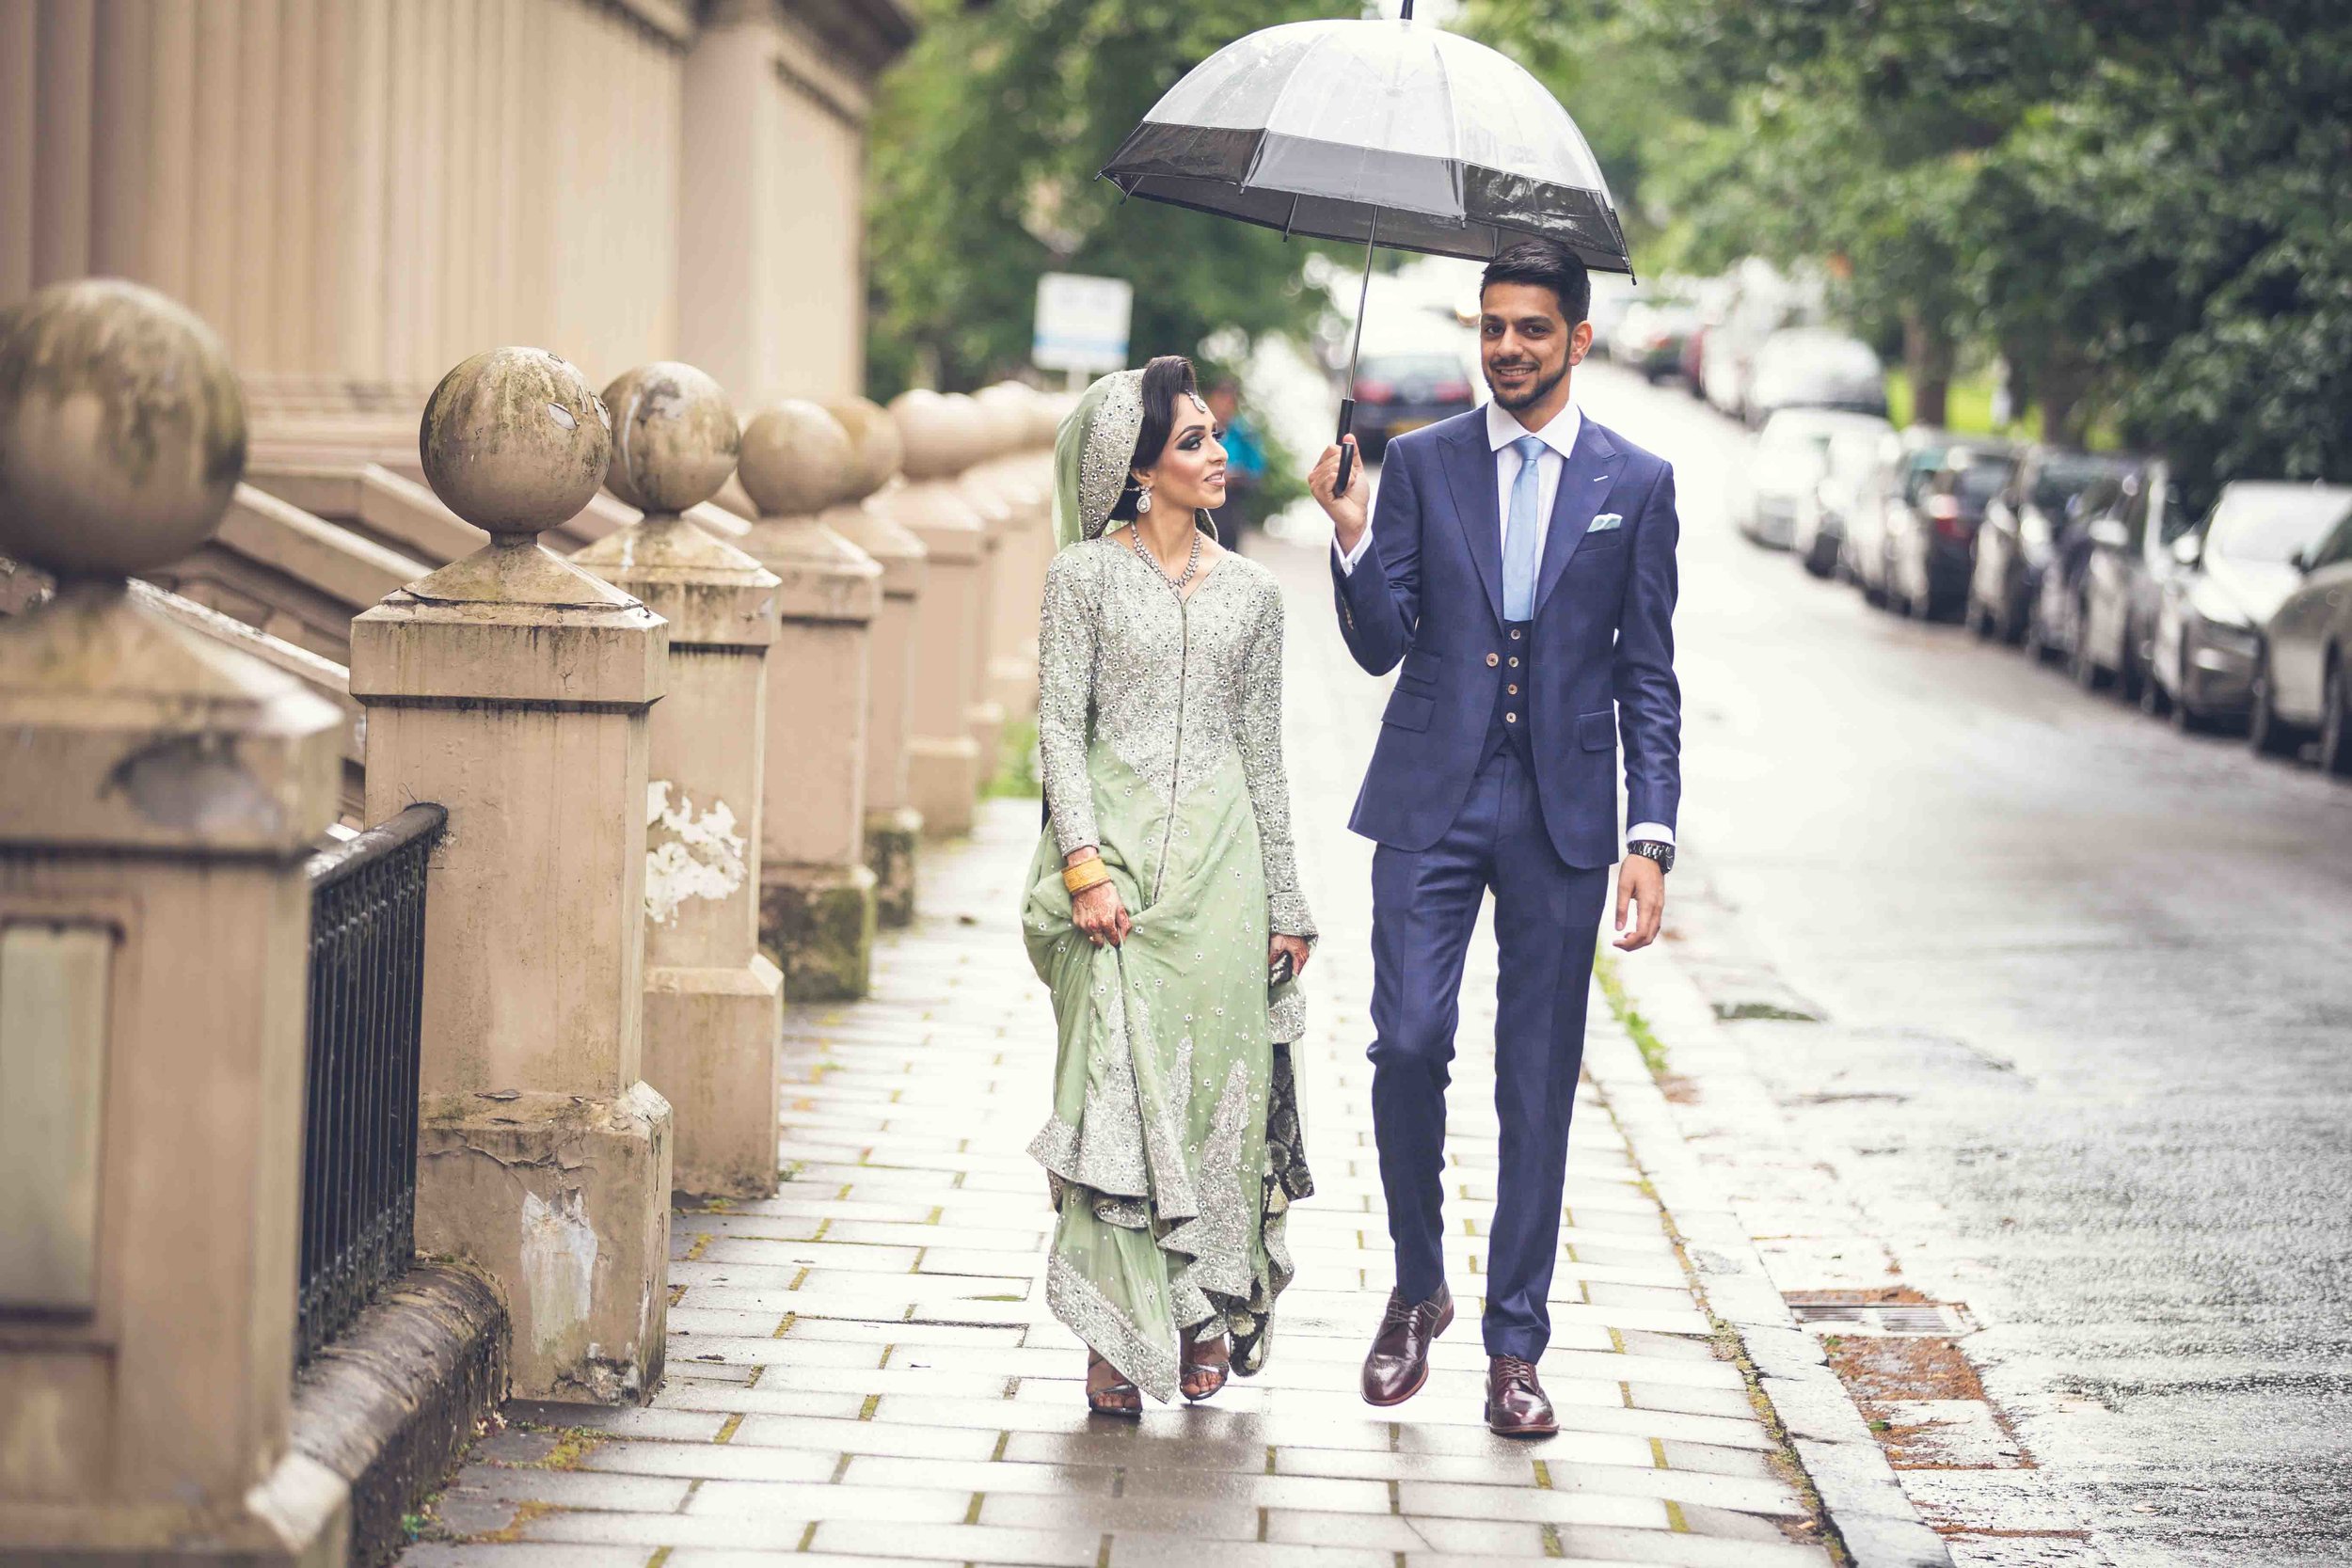 Opu Sultan Photography Asian wedding photography scotland edinburgh glasgow manchester birmingham london-16.jpg